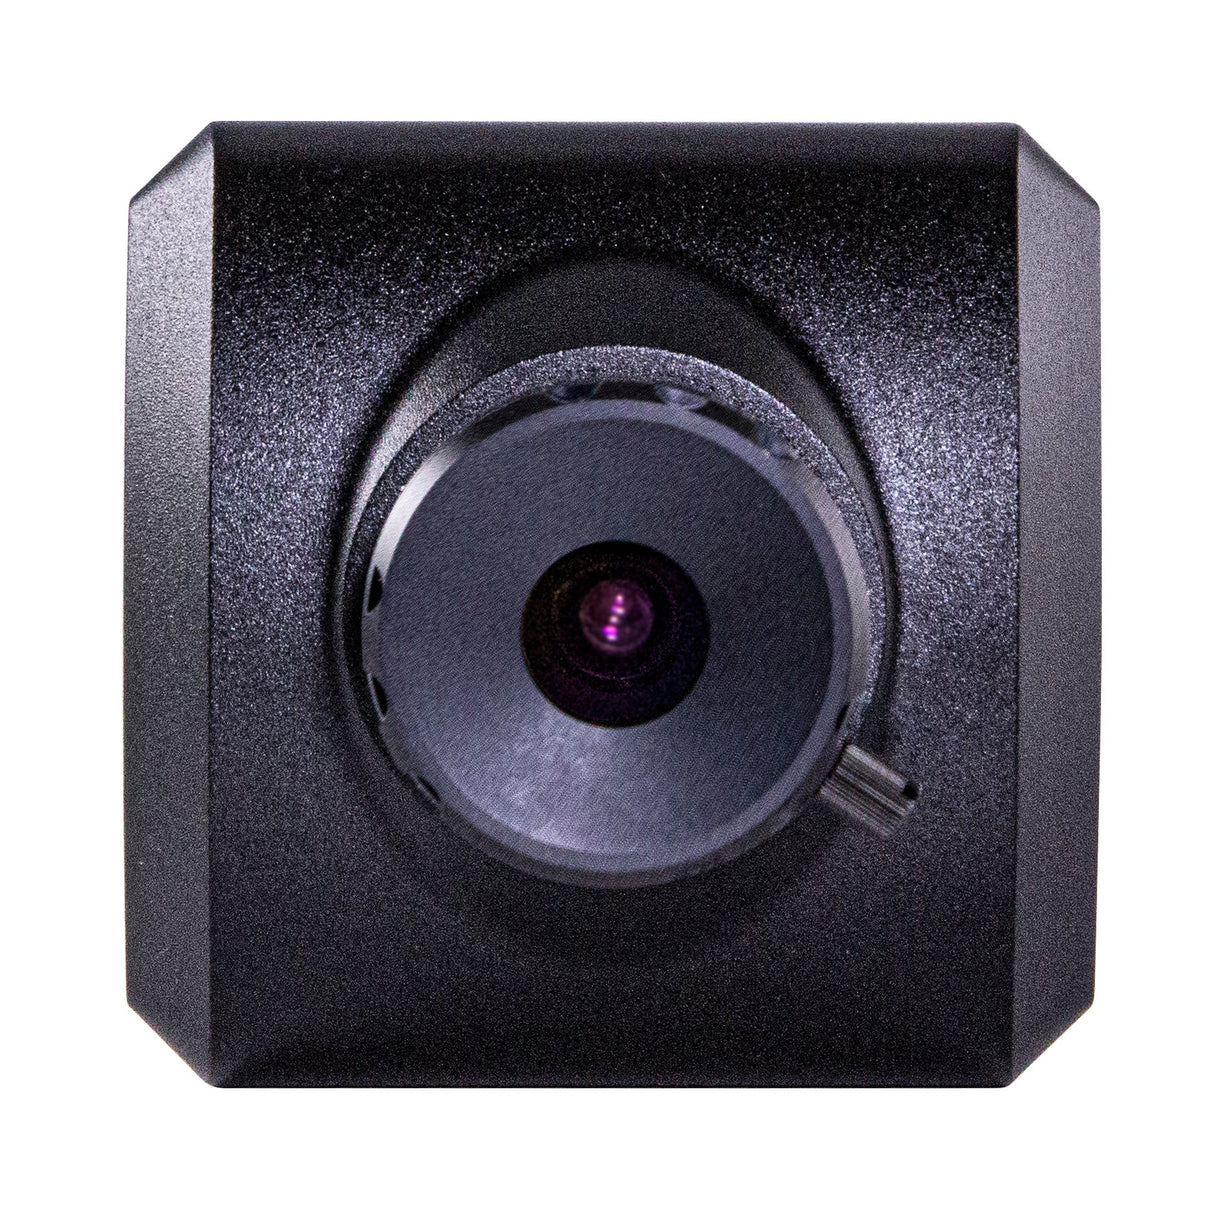 Marshall Electronics CV348 3G/HD-SDI Compact POV Camera